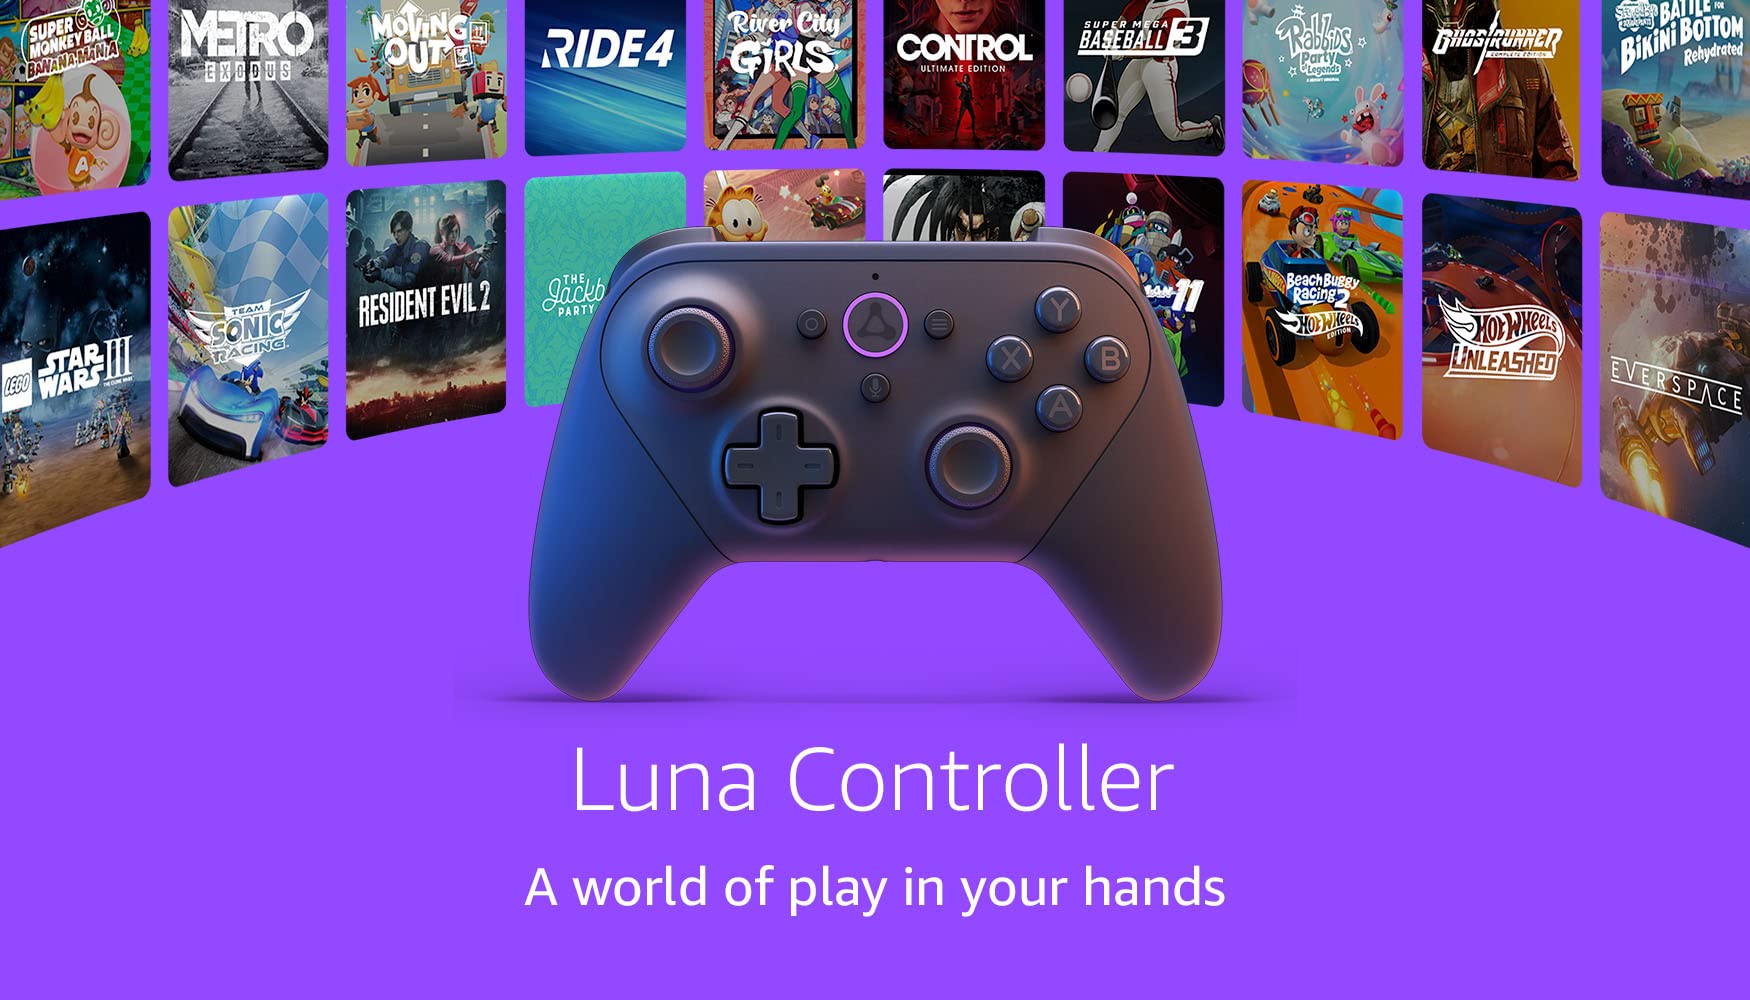 Official Luna Wireless Controller